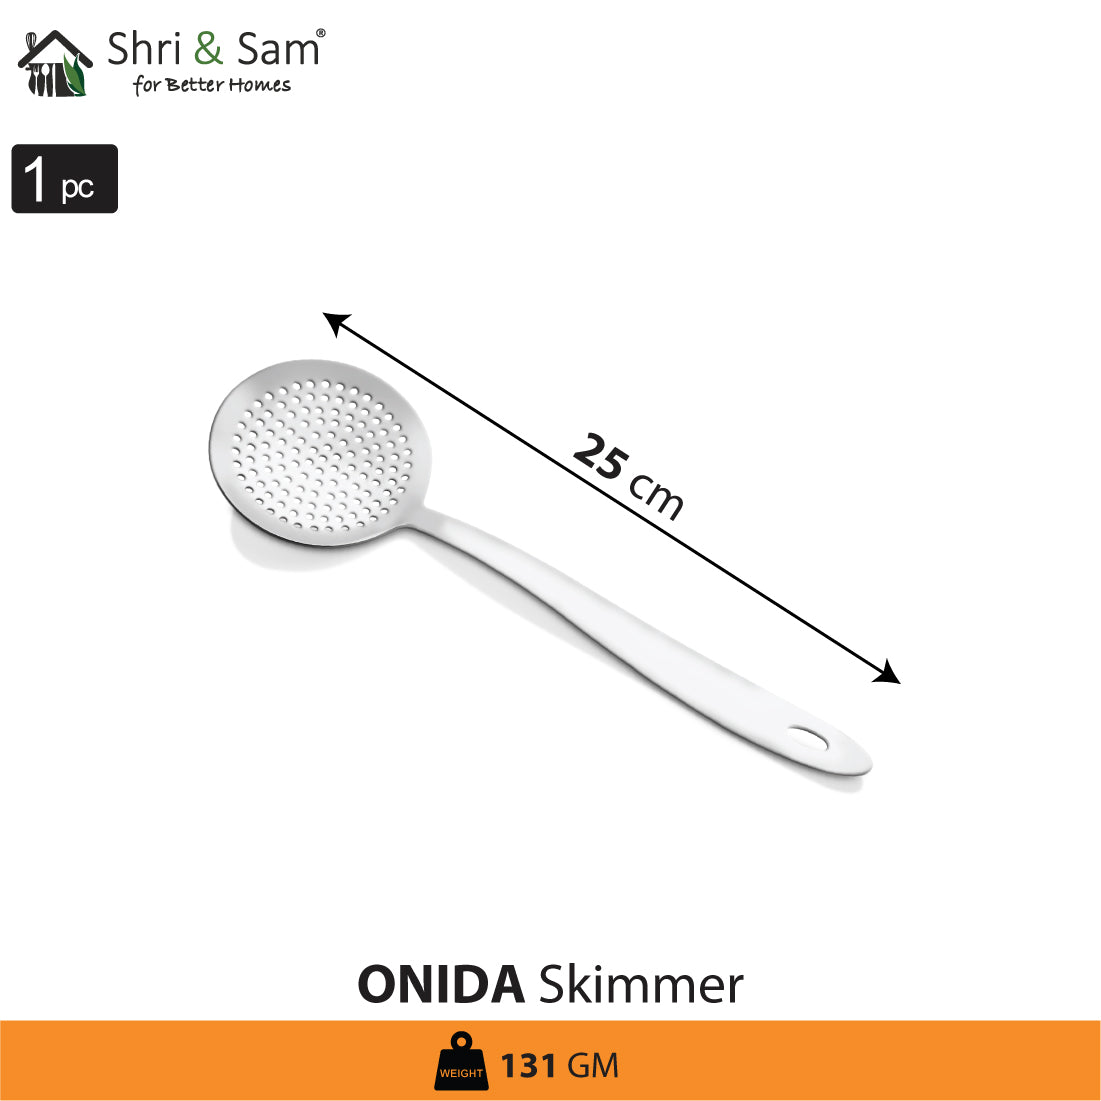 Stainless Steel Skimmer Onida